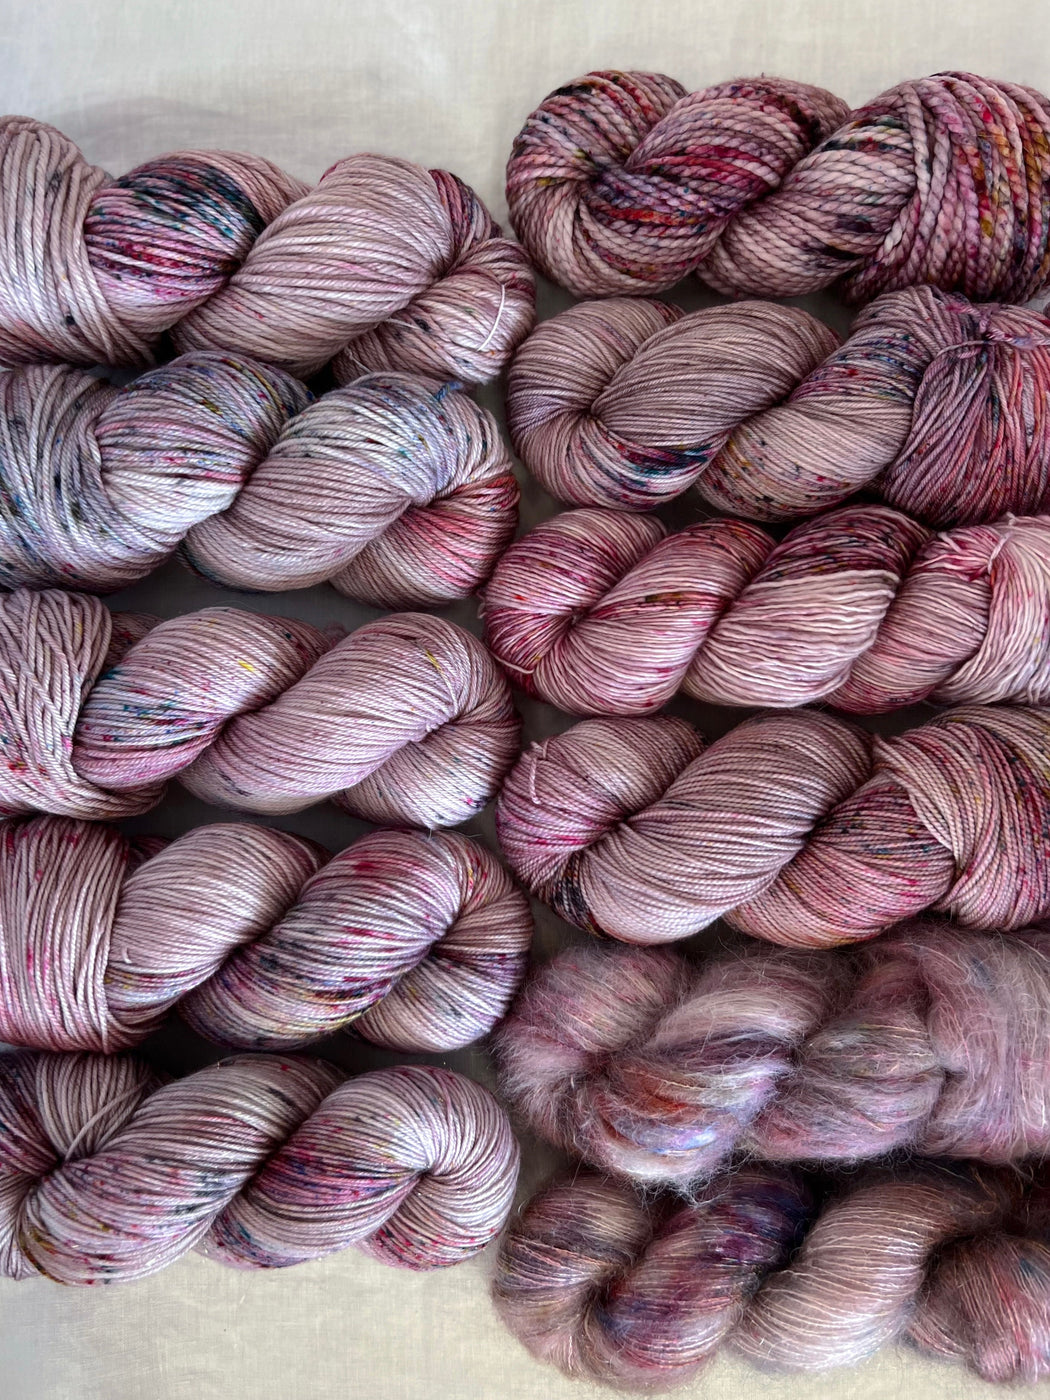 Promenade - Ruby and Roses Yarn - Hand Dyed Yarn